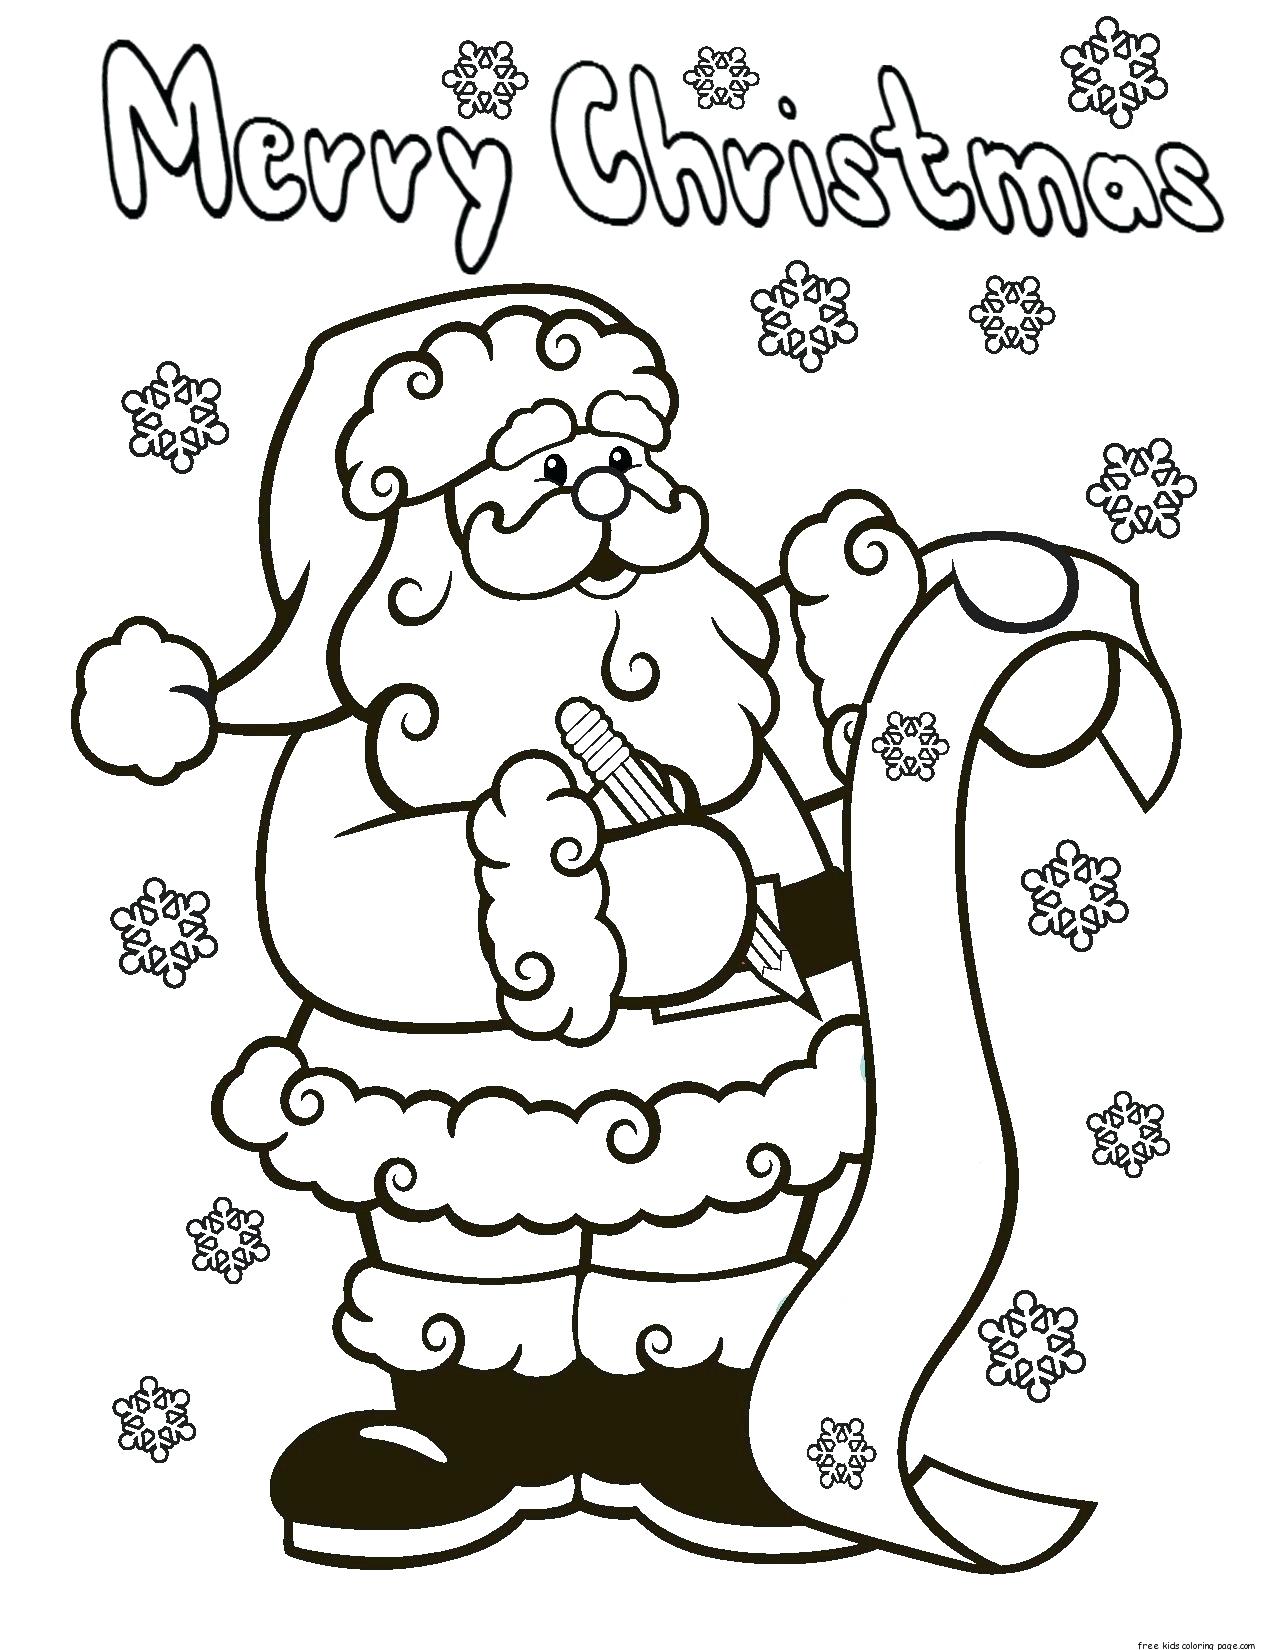 Santa Coloring Pages Printable Free at GetColorings.com | Free